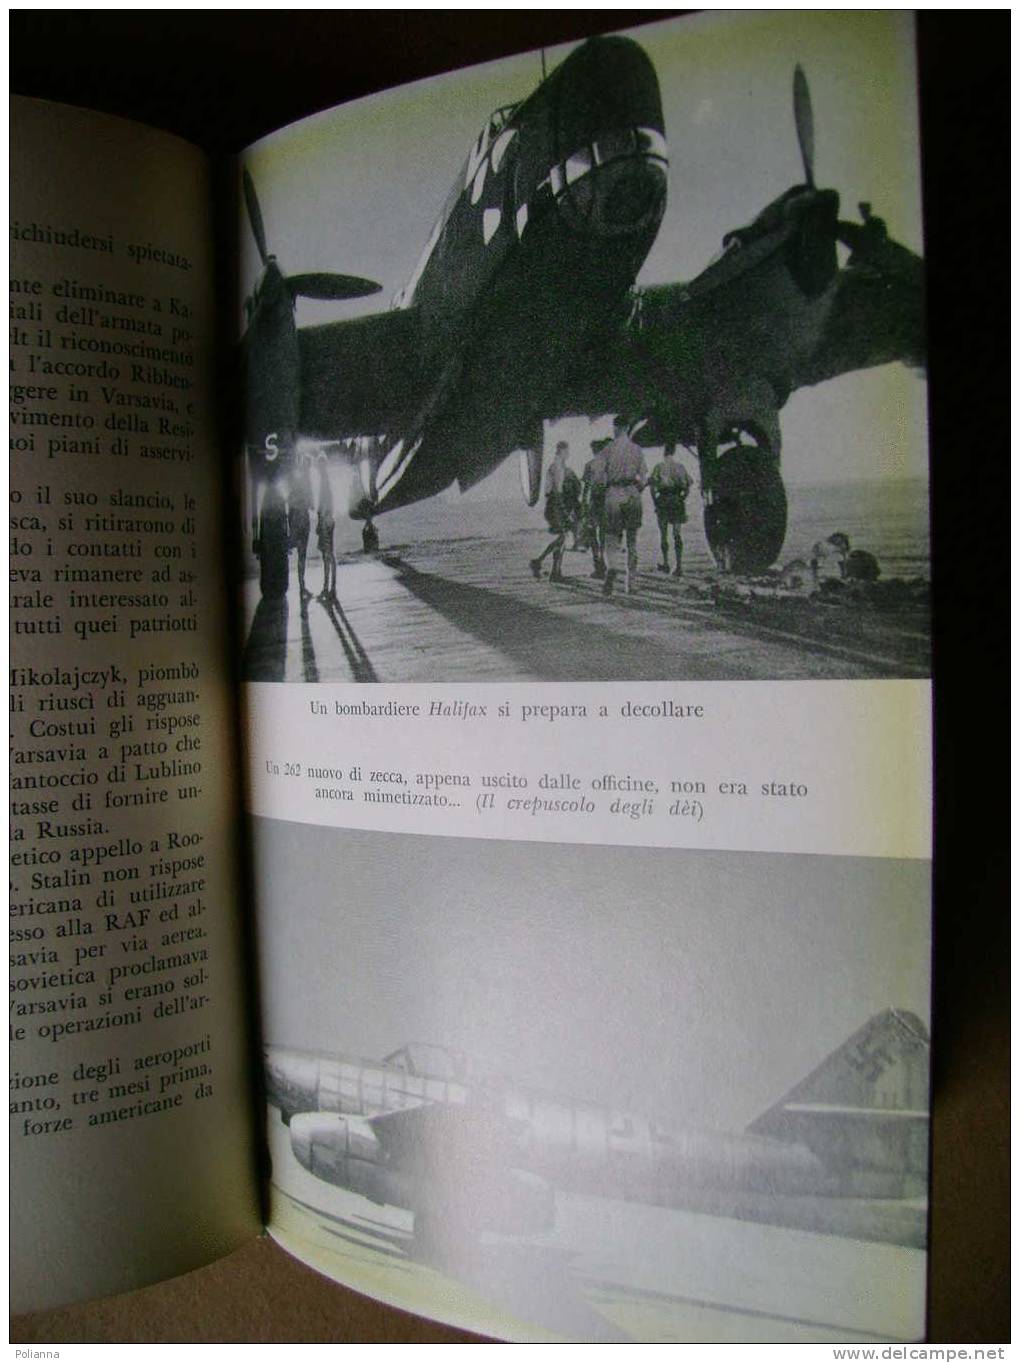 PAC/17 Closterman LA GUERRA NELL´ARIA Longanesi 1963/aviazione/aerei Militari - Fliegerei